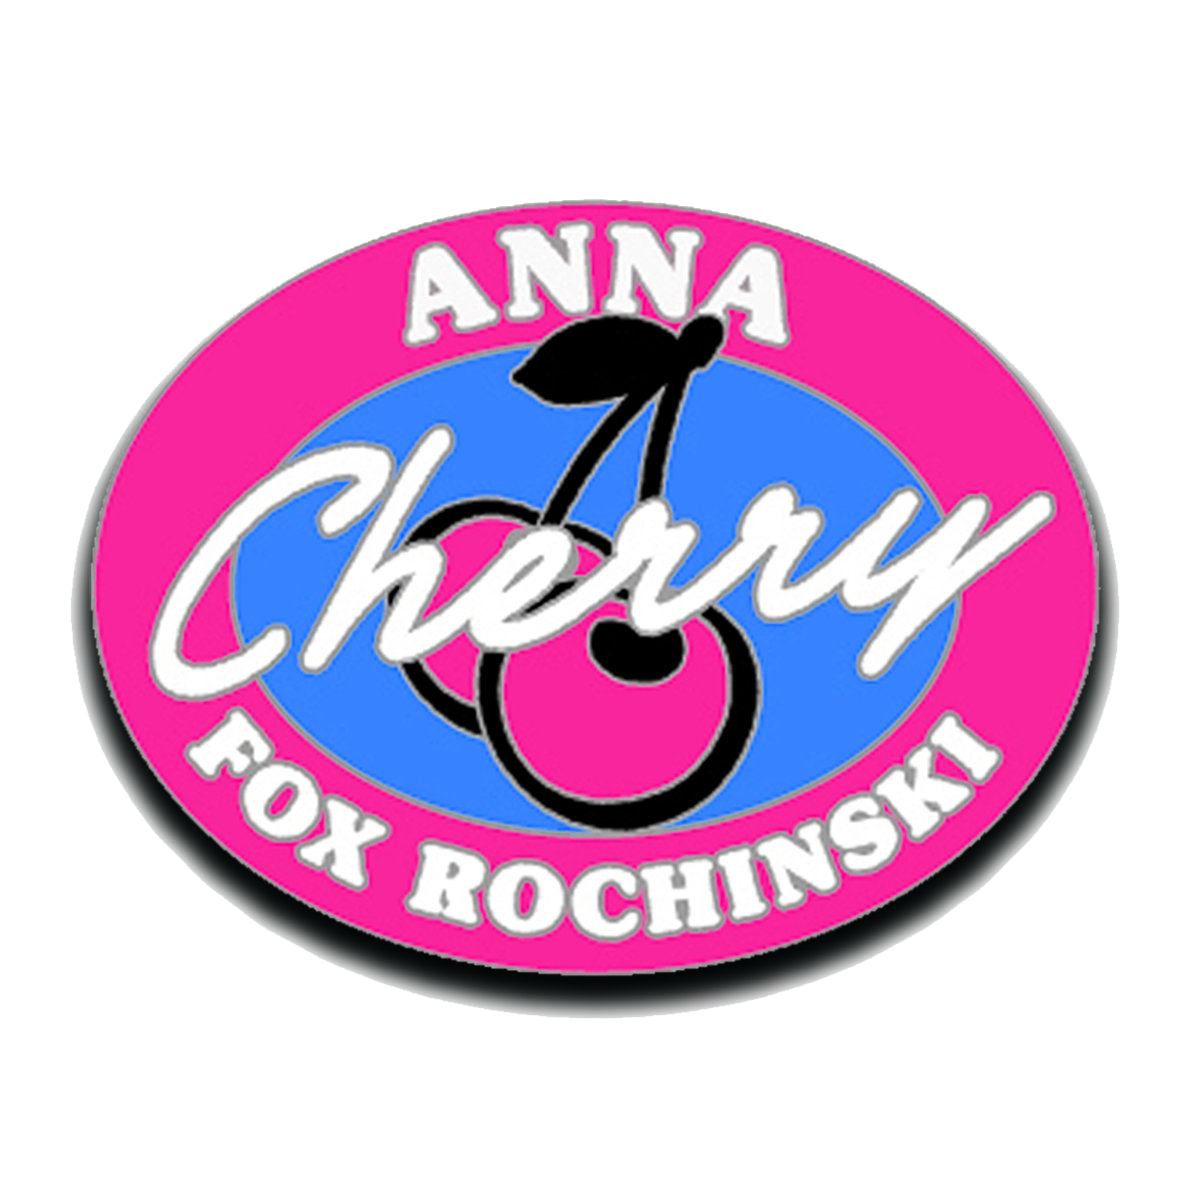 Anna Fox Rochinski "Cherry"